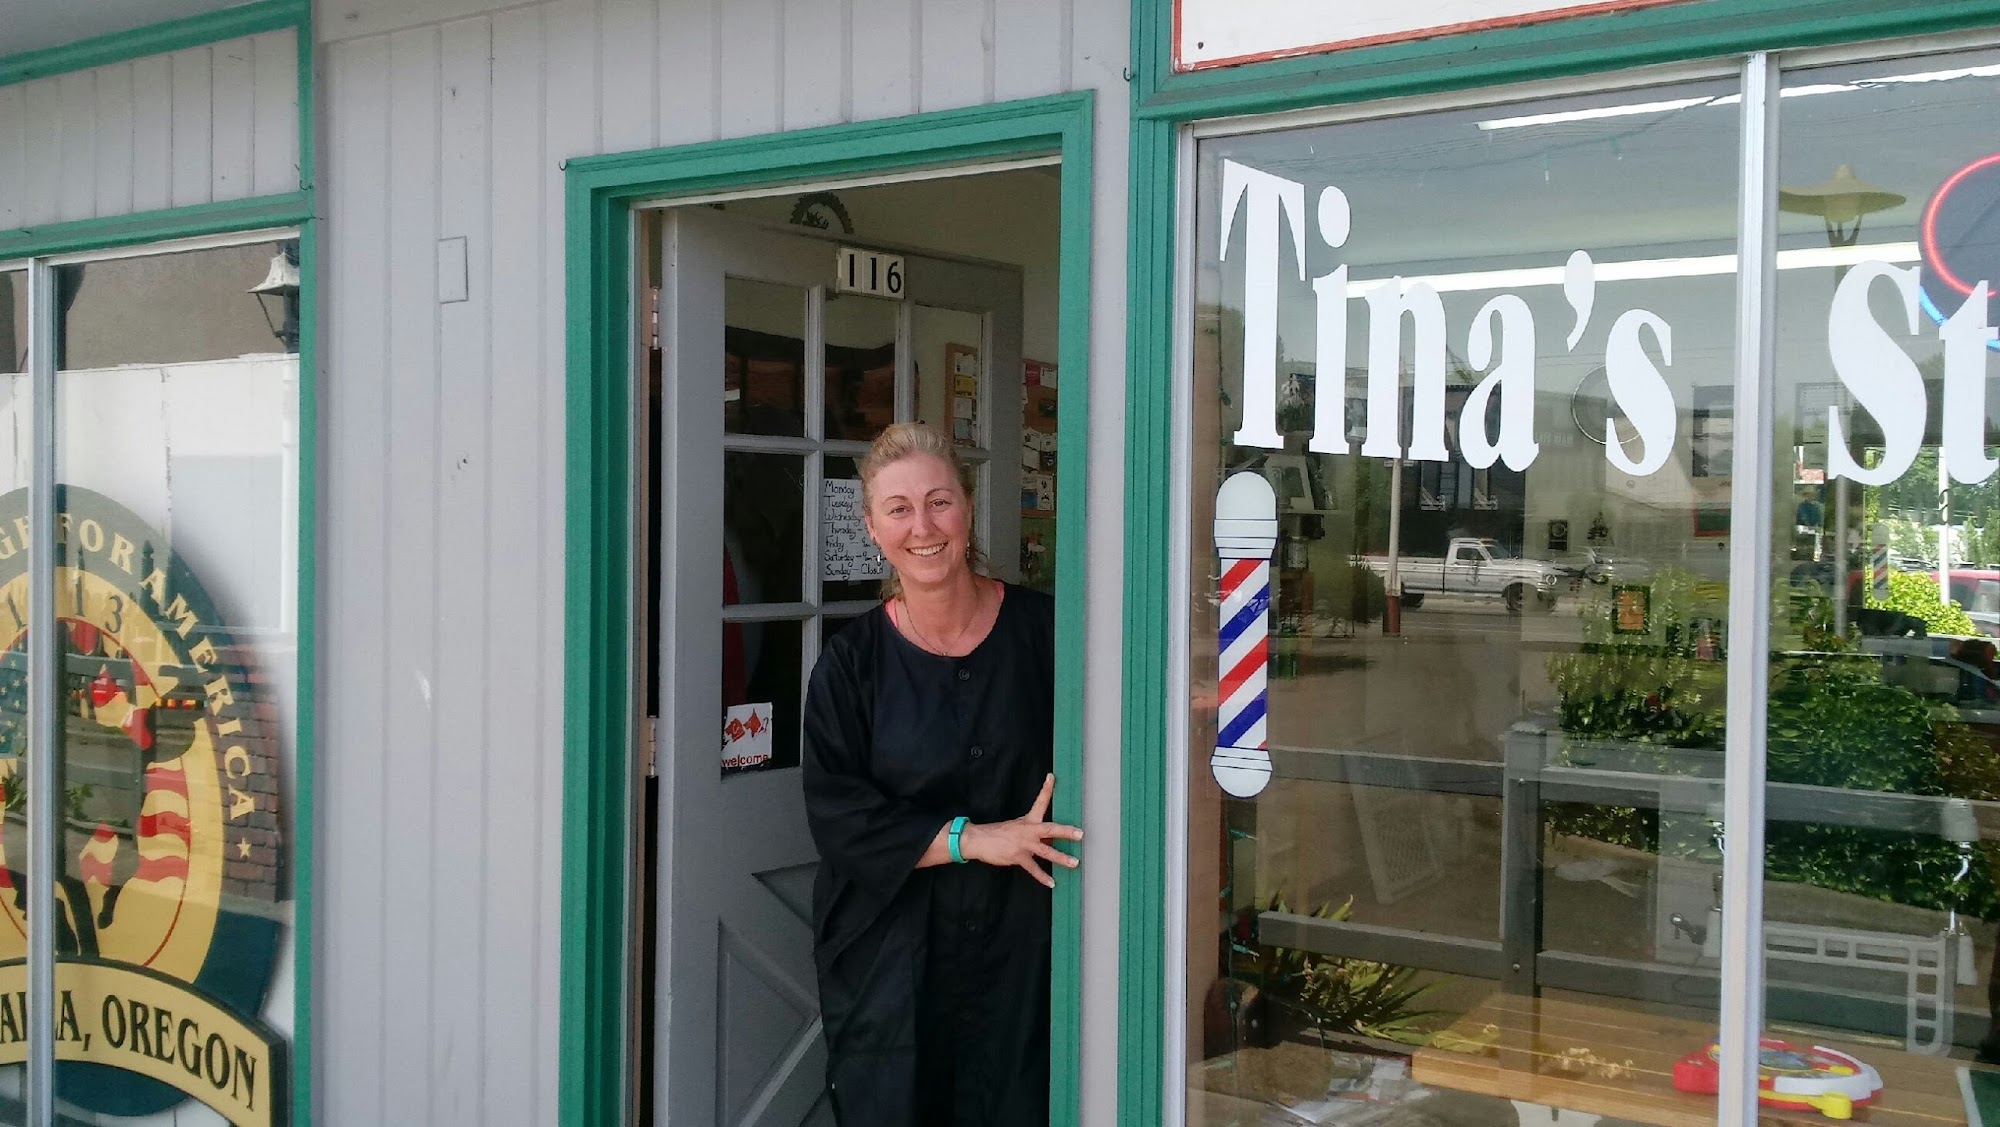 Tina's Barber Shop 116 Engle Ave, Molalla Oregon 97038